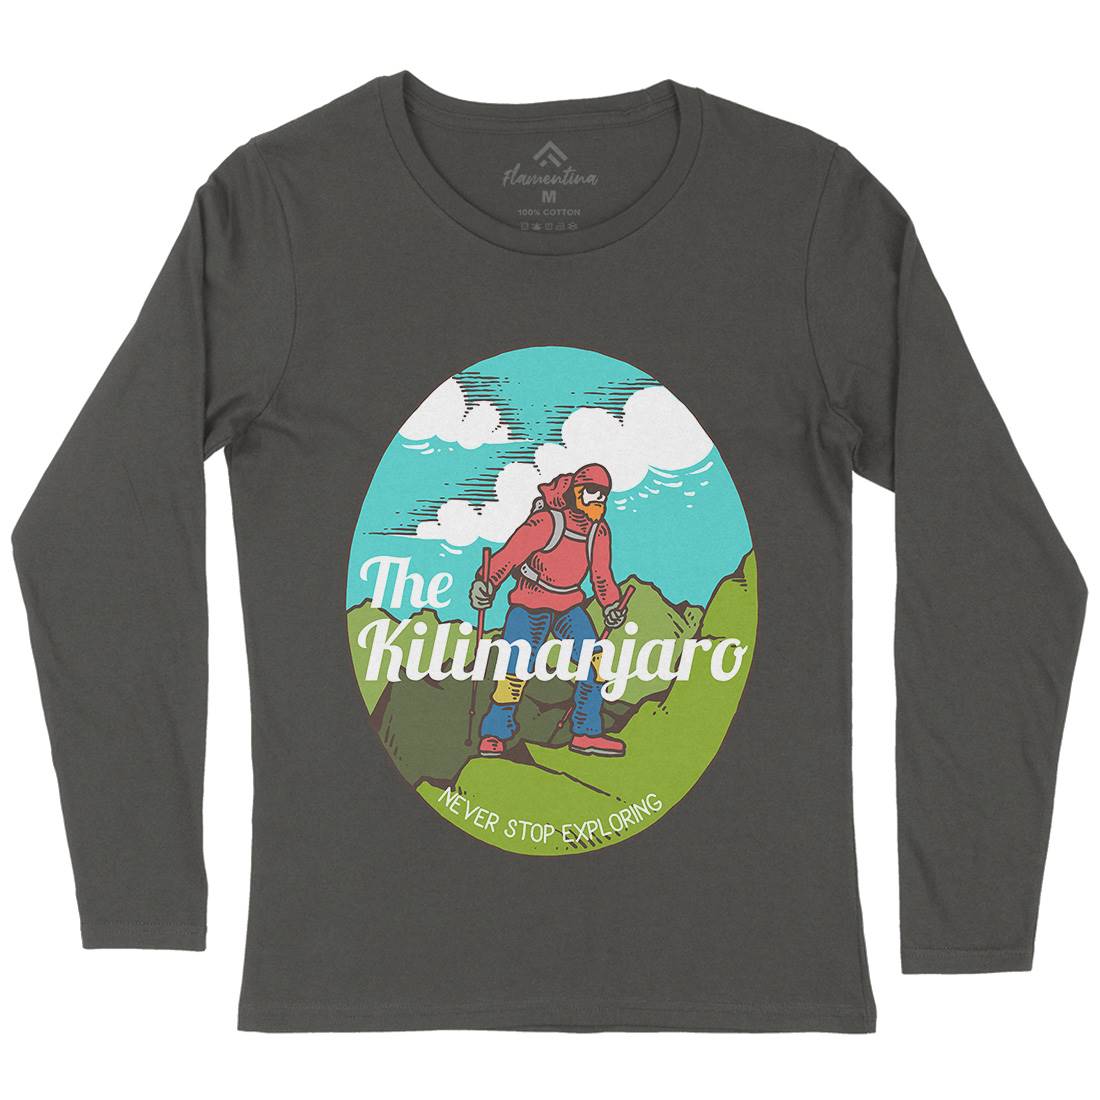 Kilimanjaro Womens Long Sleeve T-Shirt Nature C739